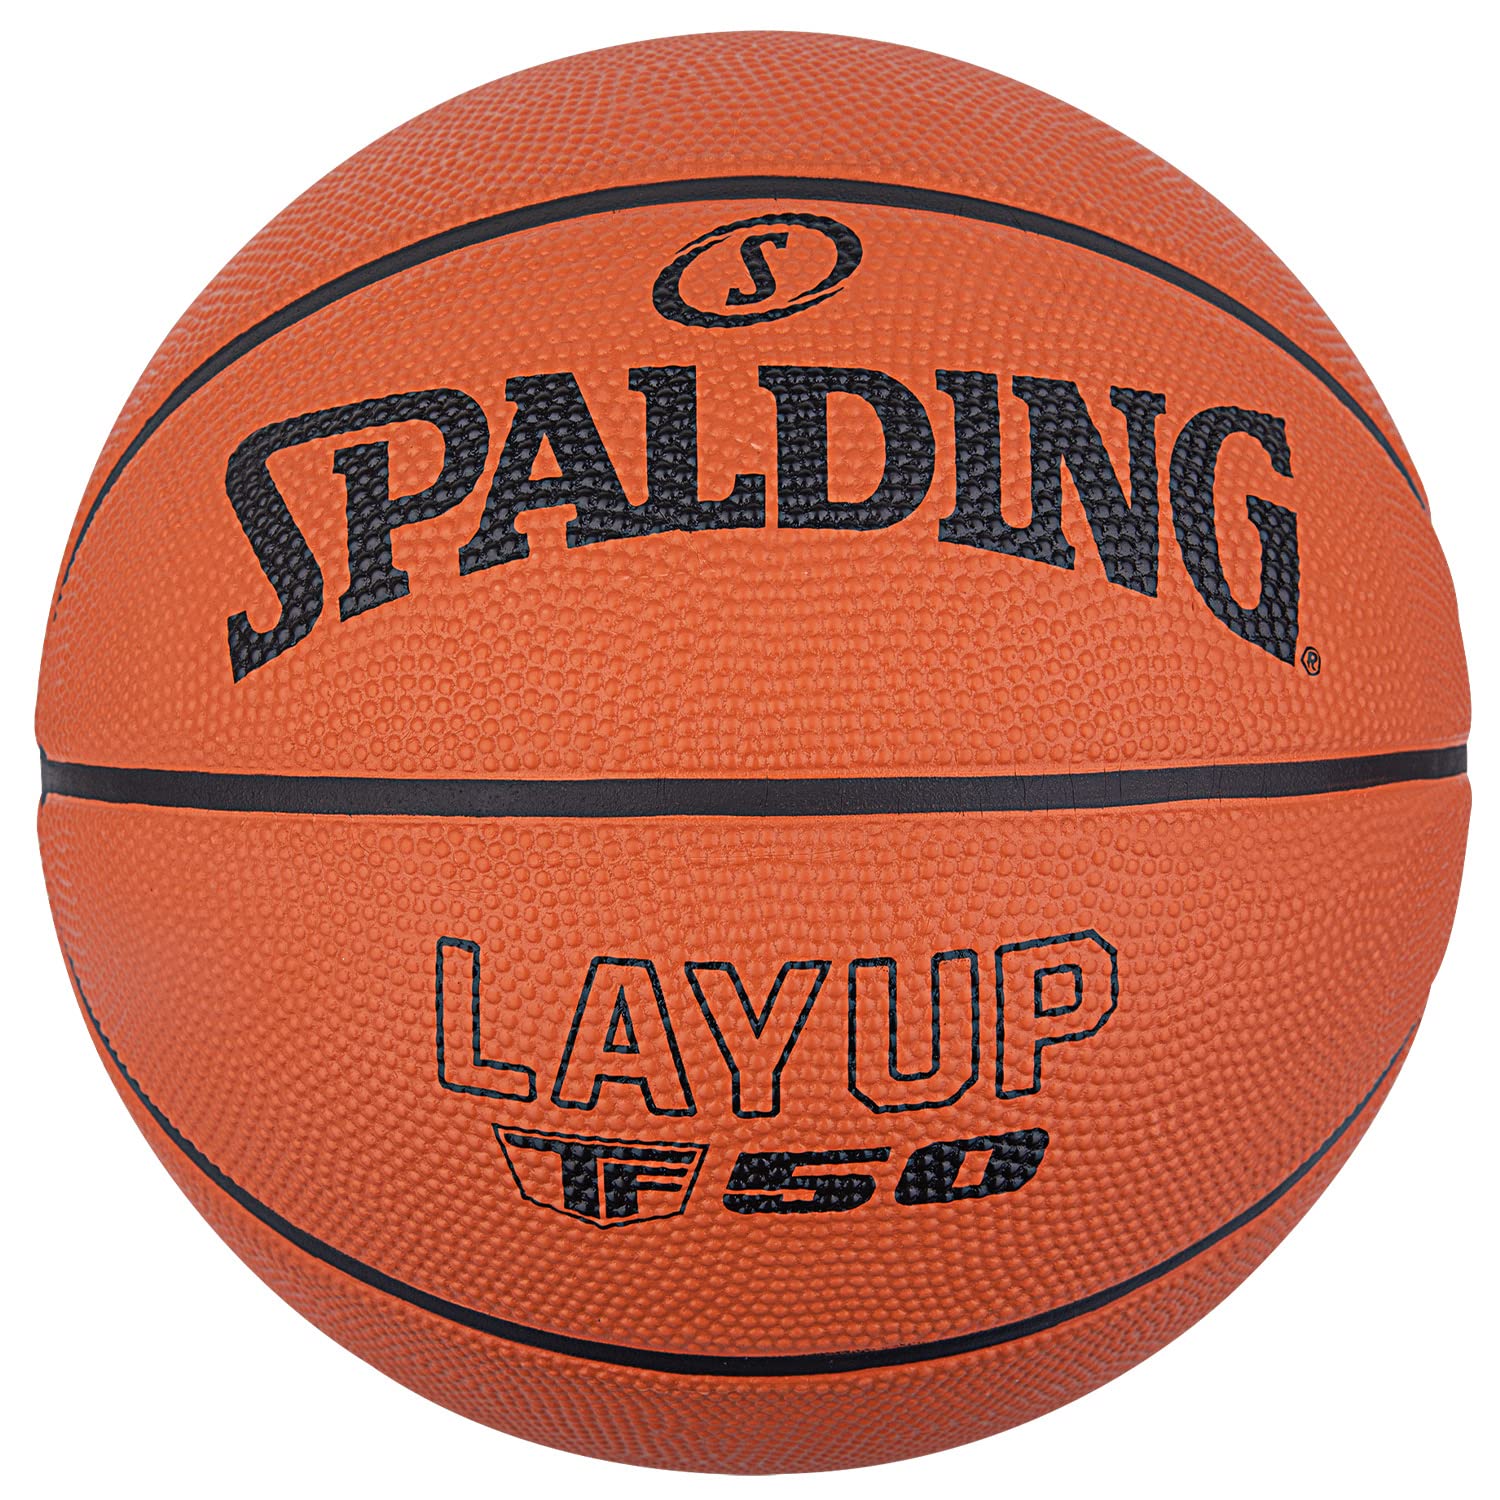 Abordable Spalding Ballon Layup TF-50 zktk8qilt Outlet Shop 